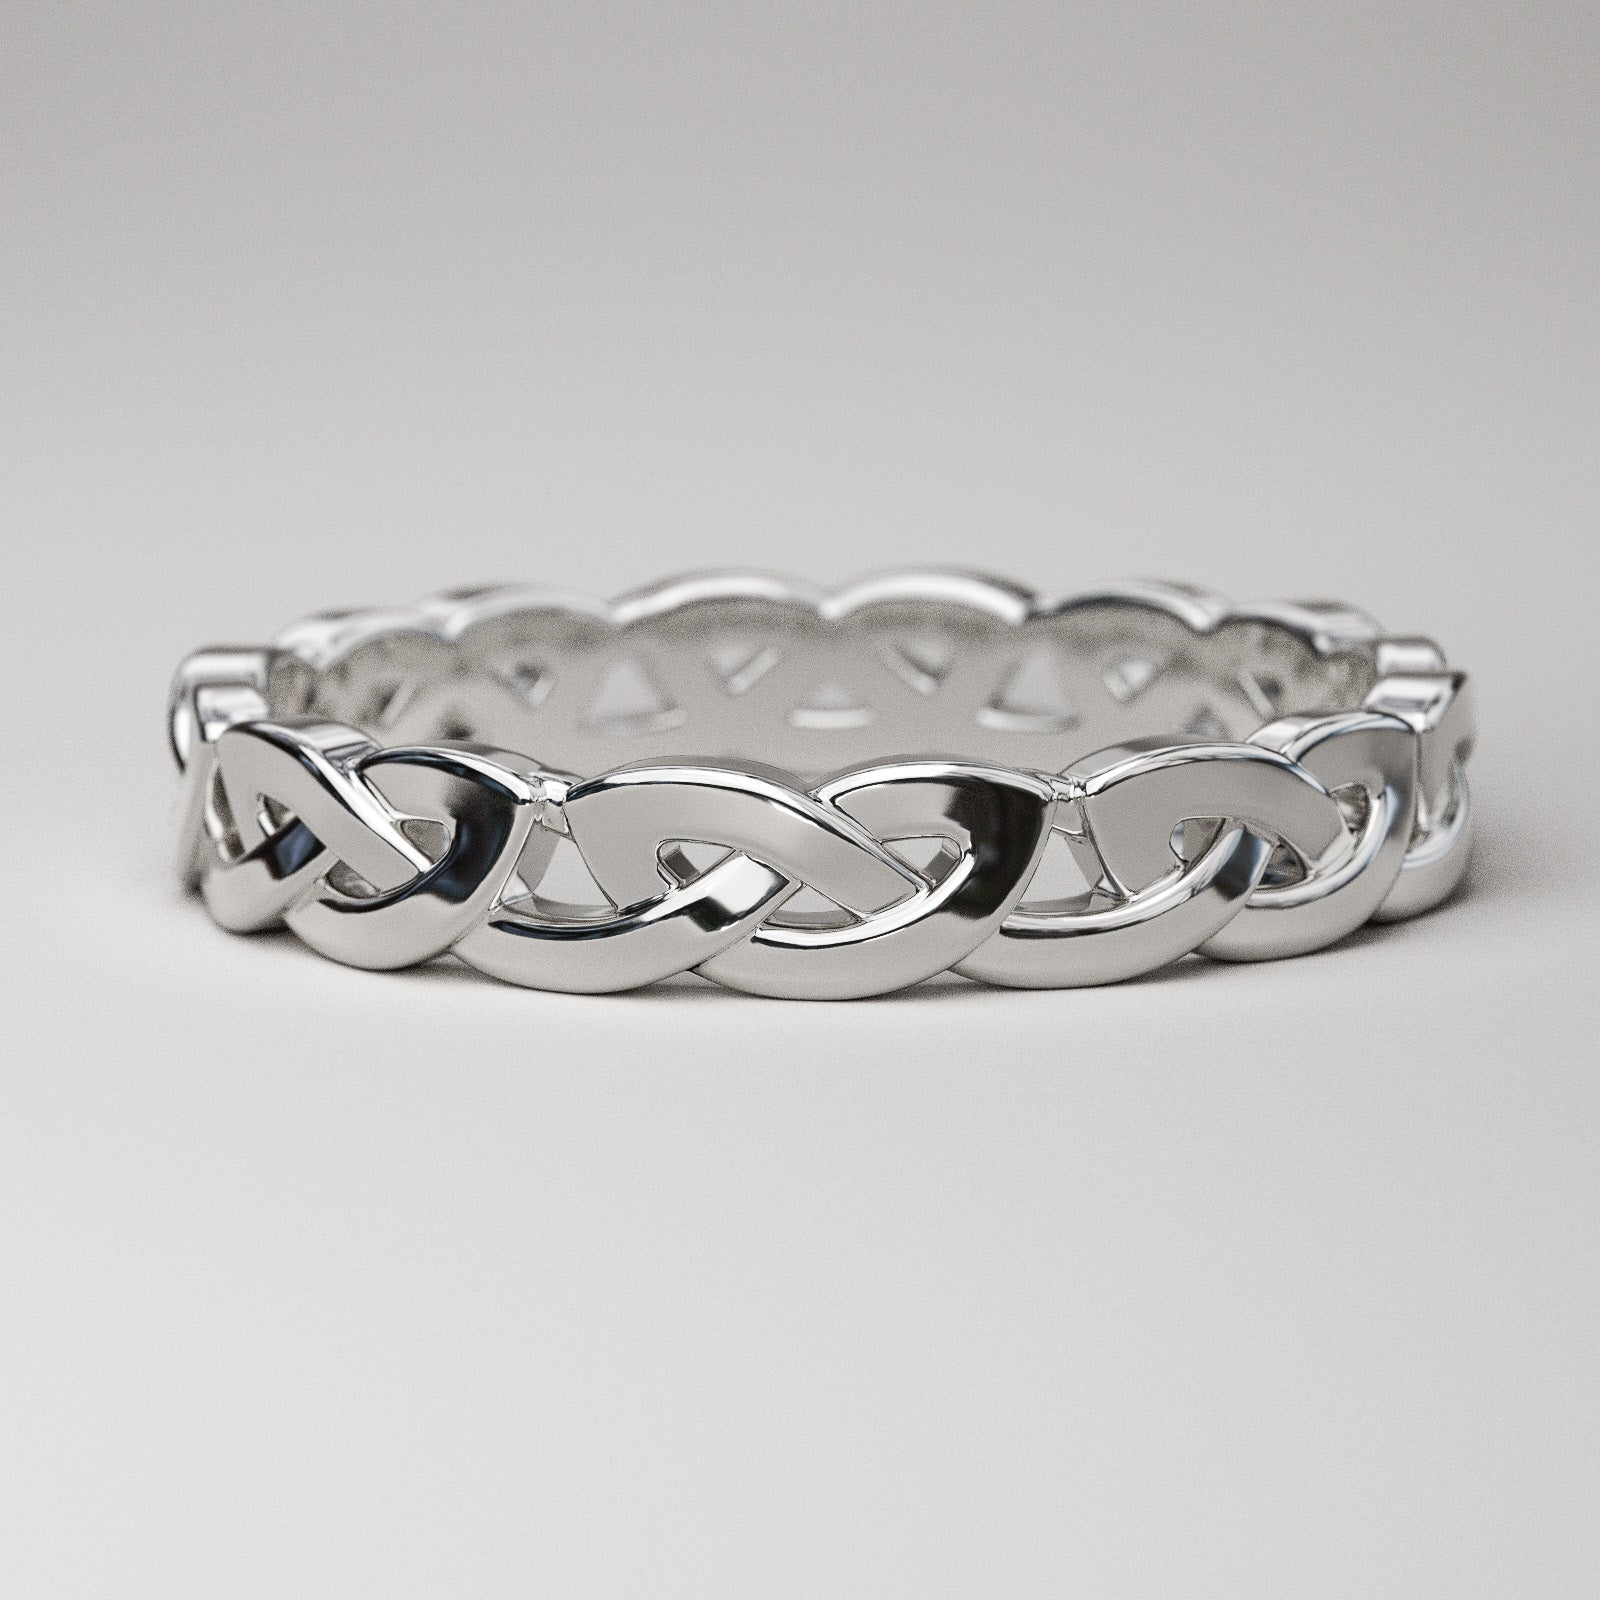 White gold Celtic wedding band - overhand knot eternity ring for women